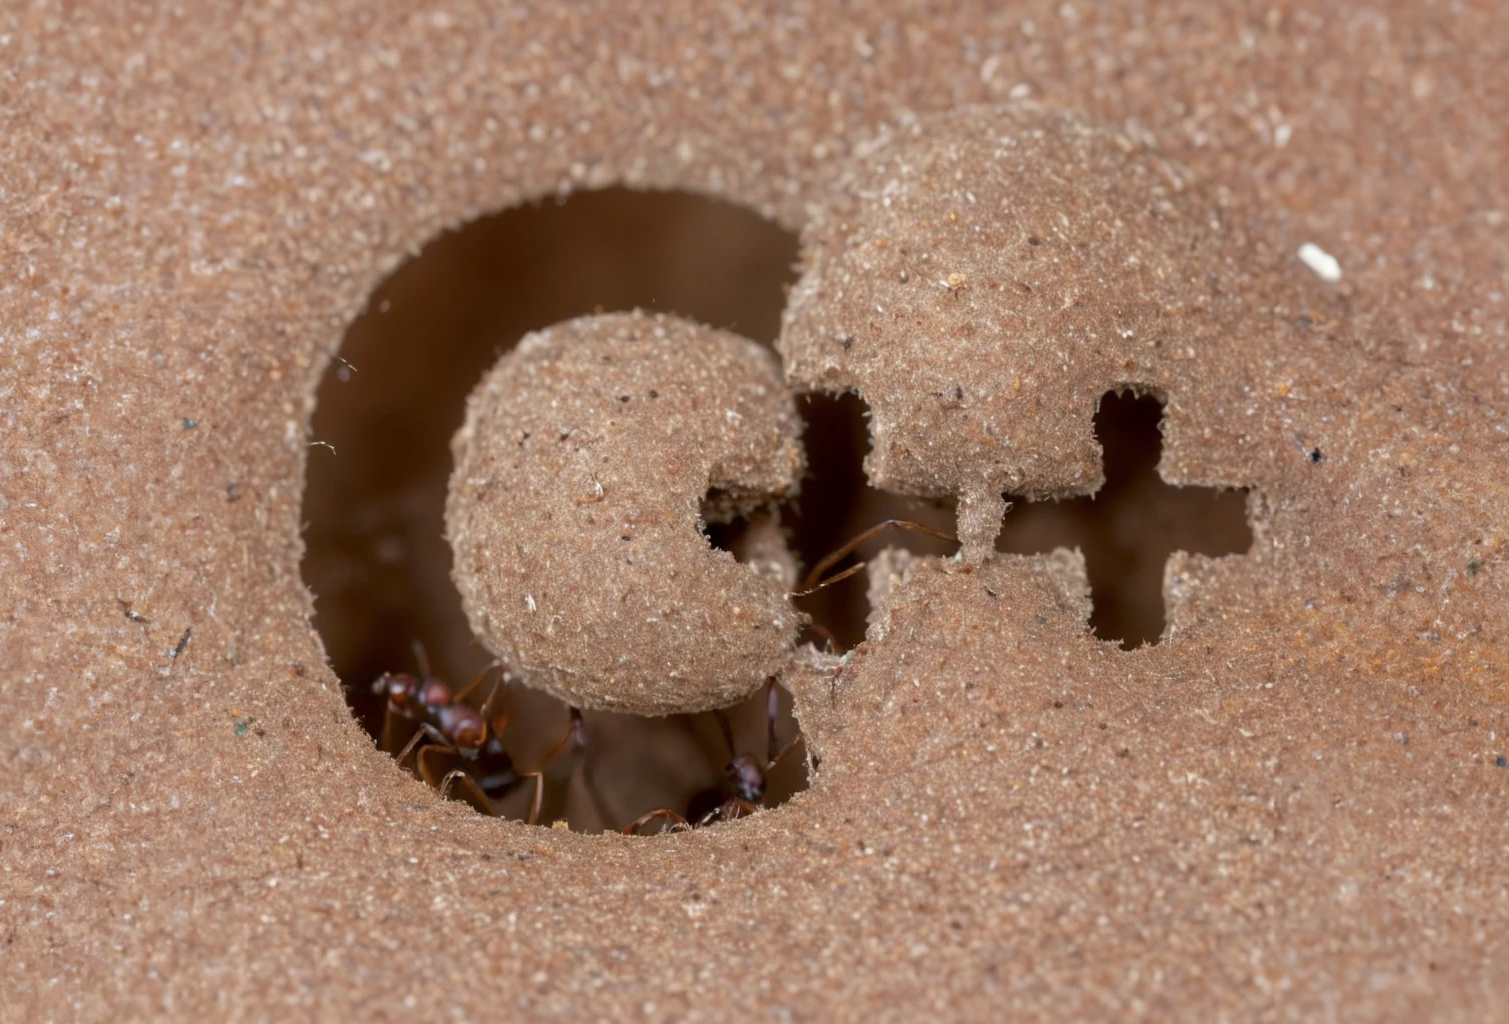 an ant nest shaped like the C++ logo